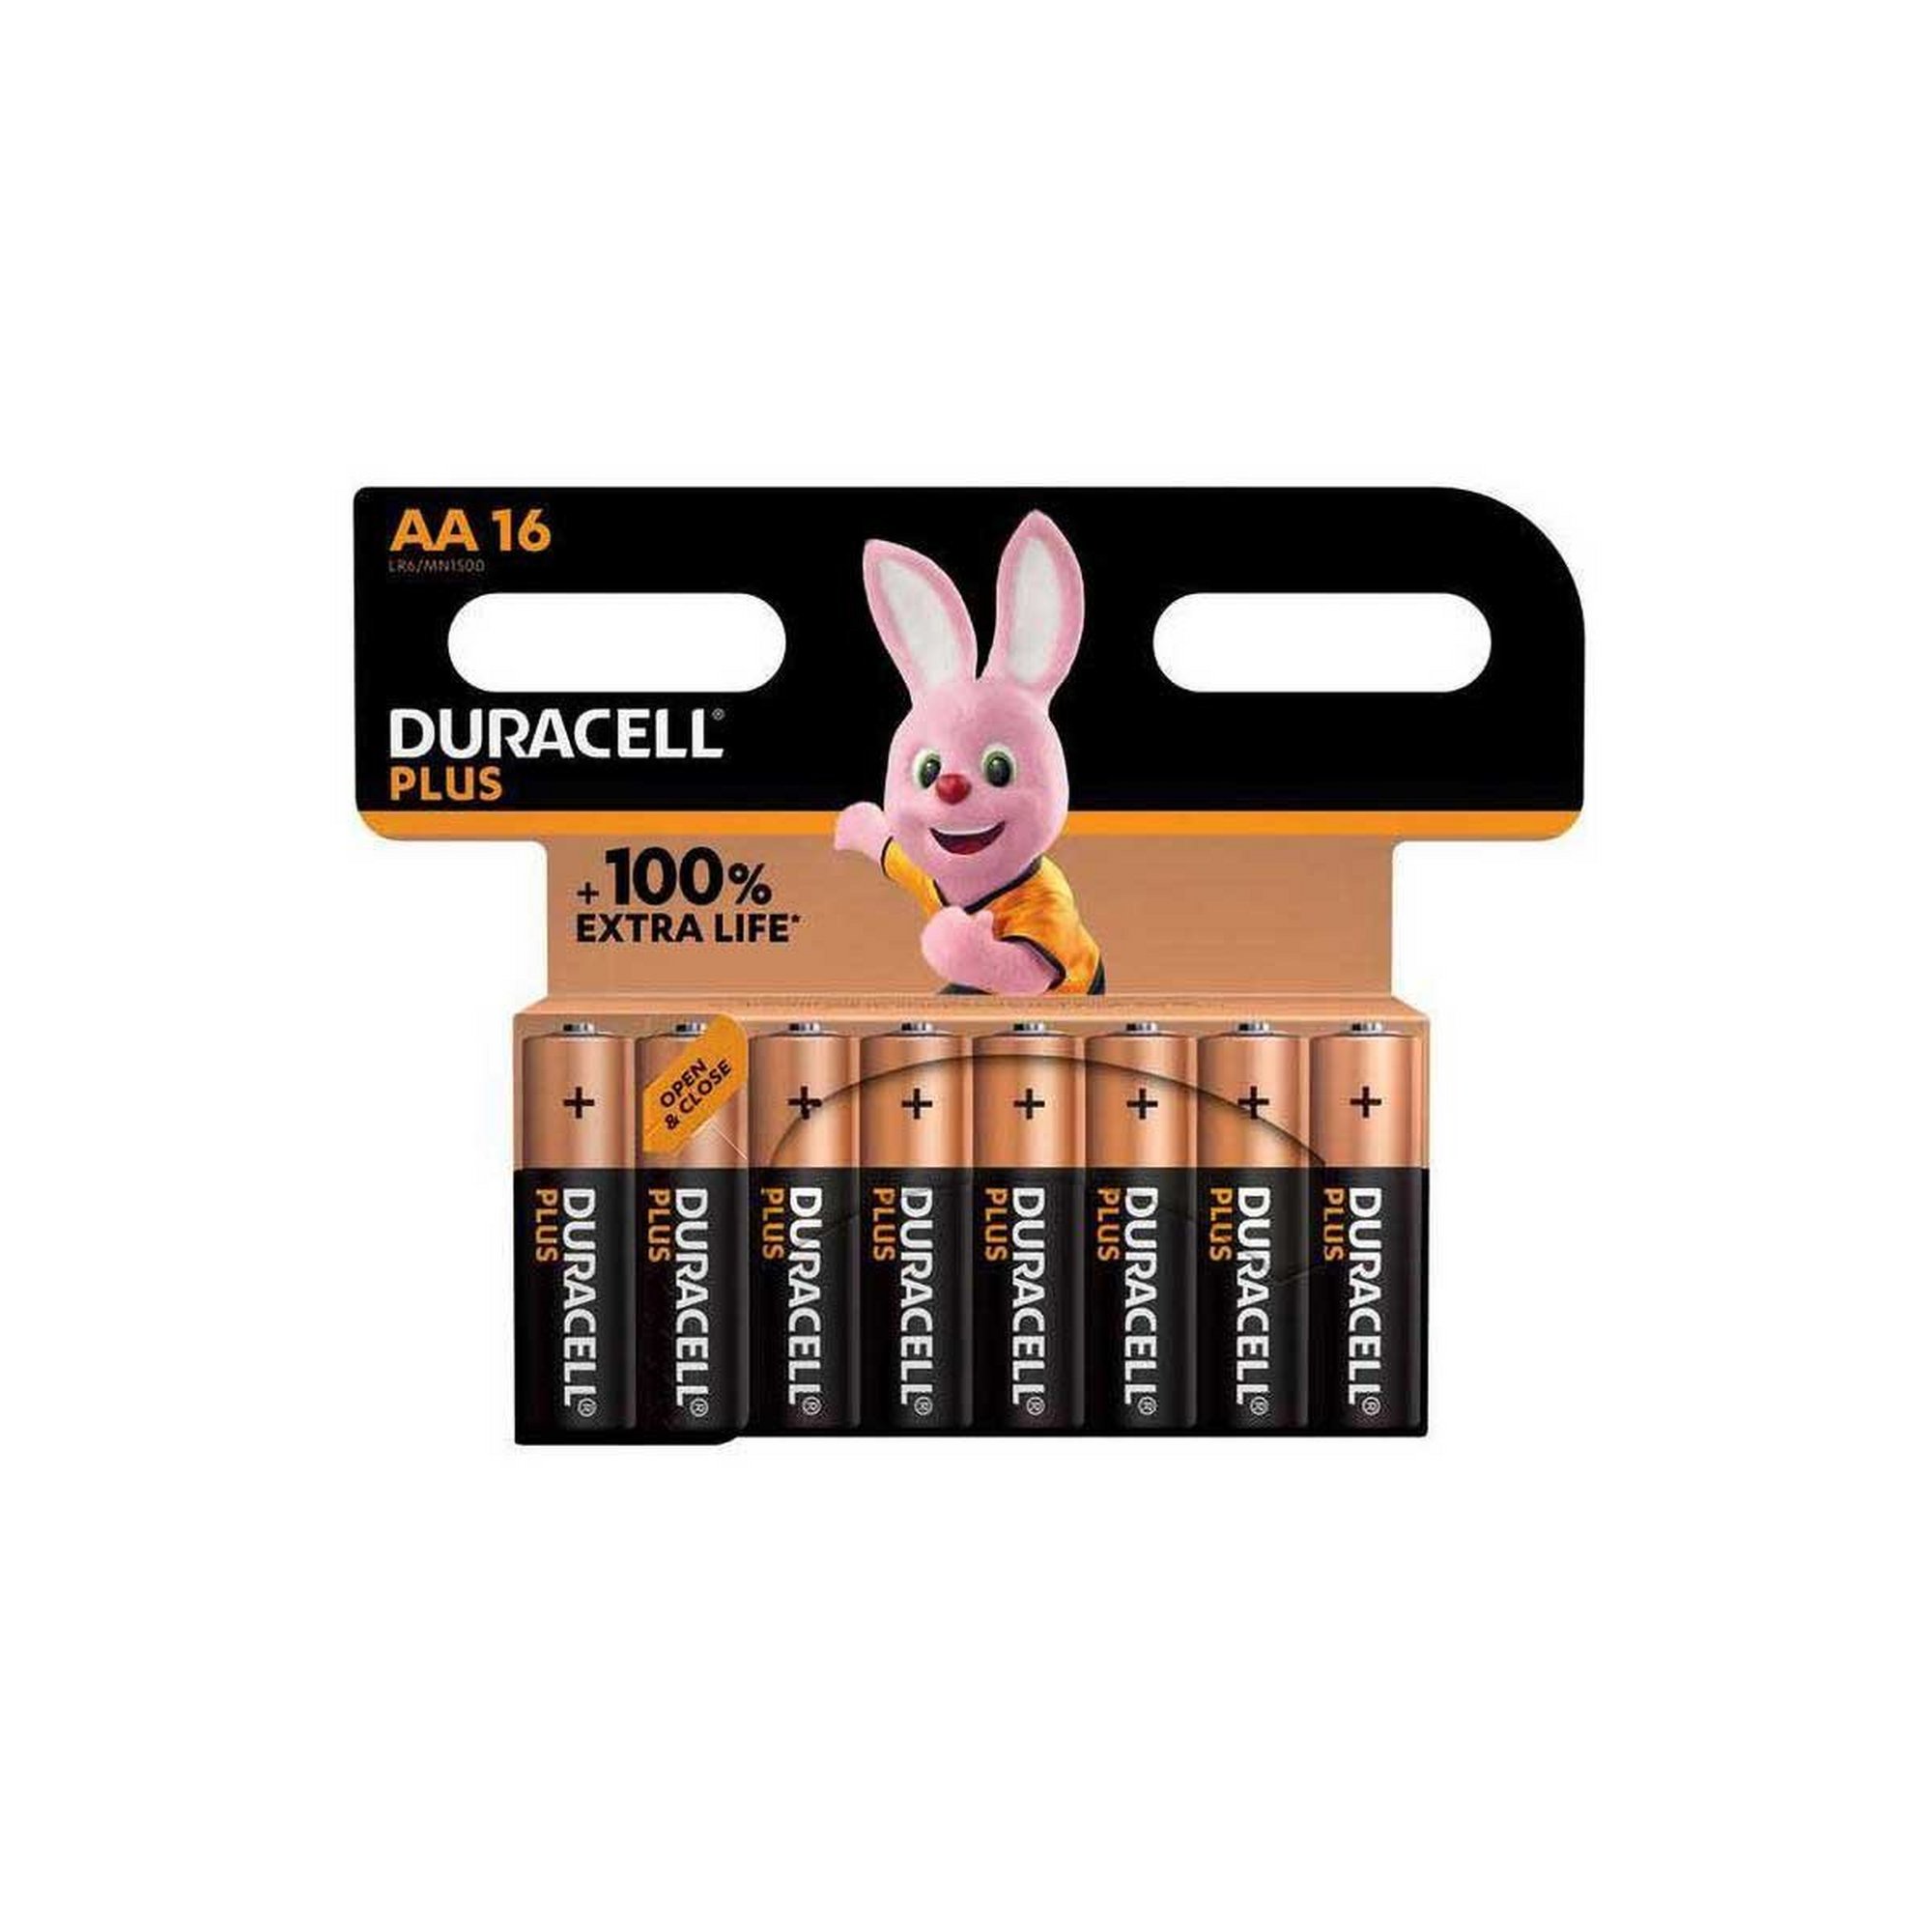 Duracell Plus AA Alkaline Batteries - Pack of 16